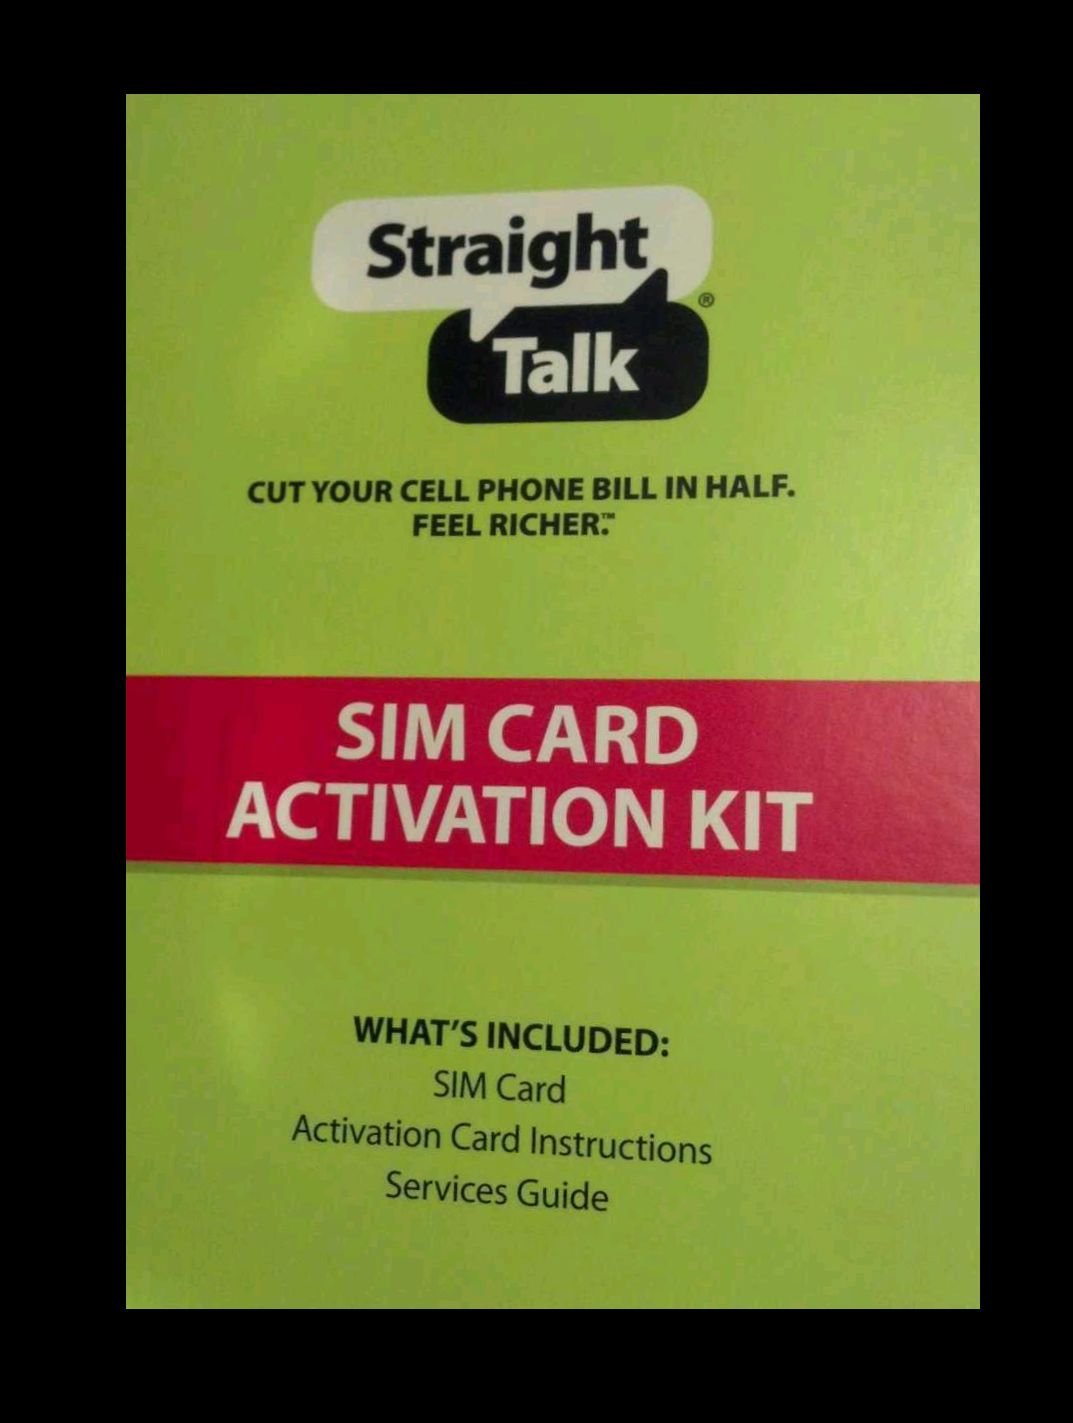 do straight talk phones have sim cards